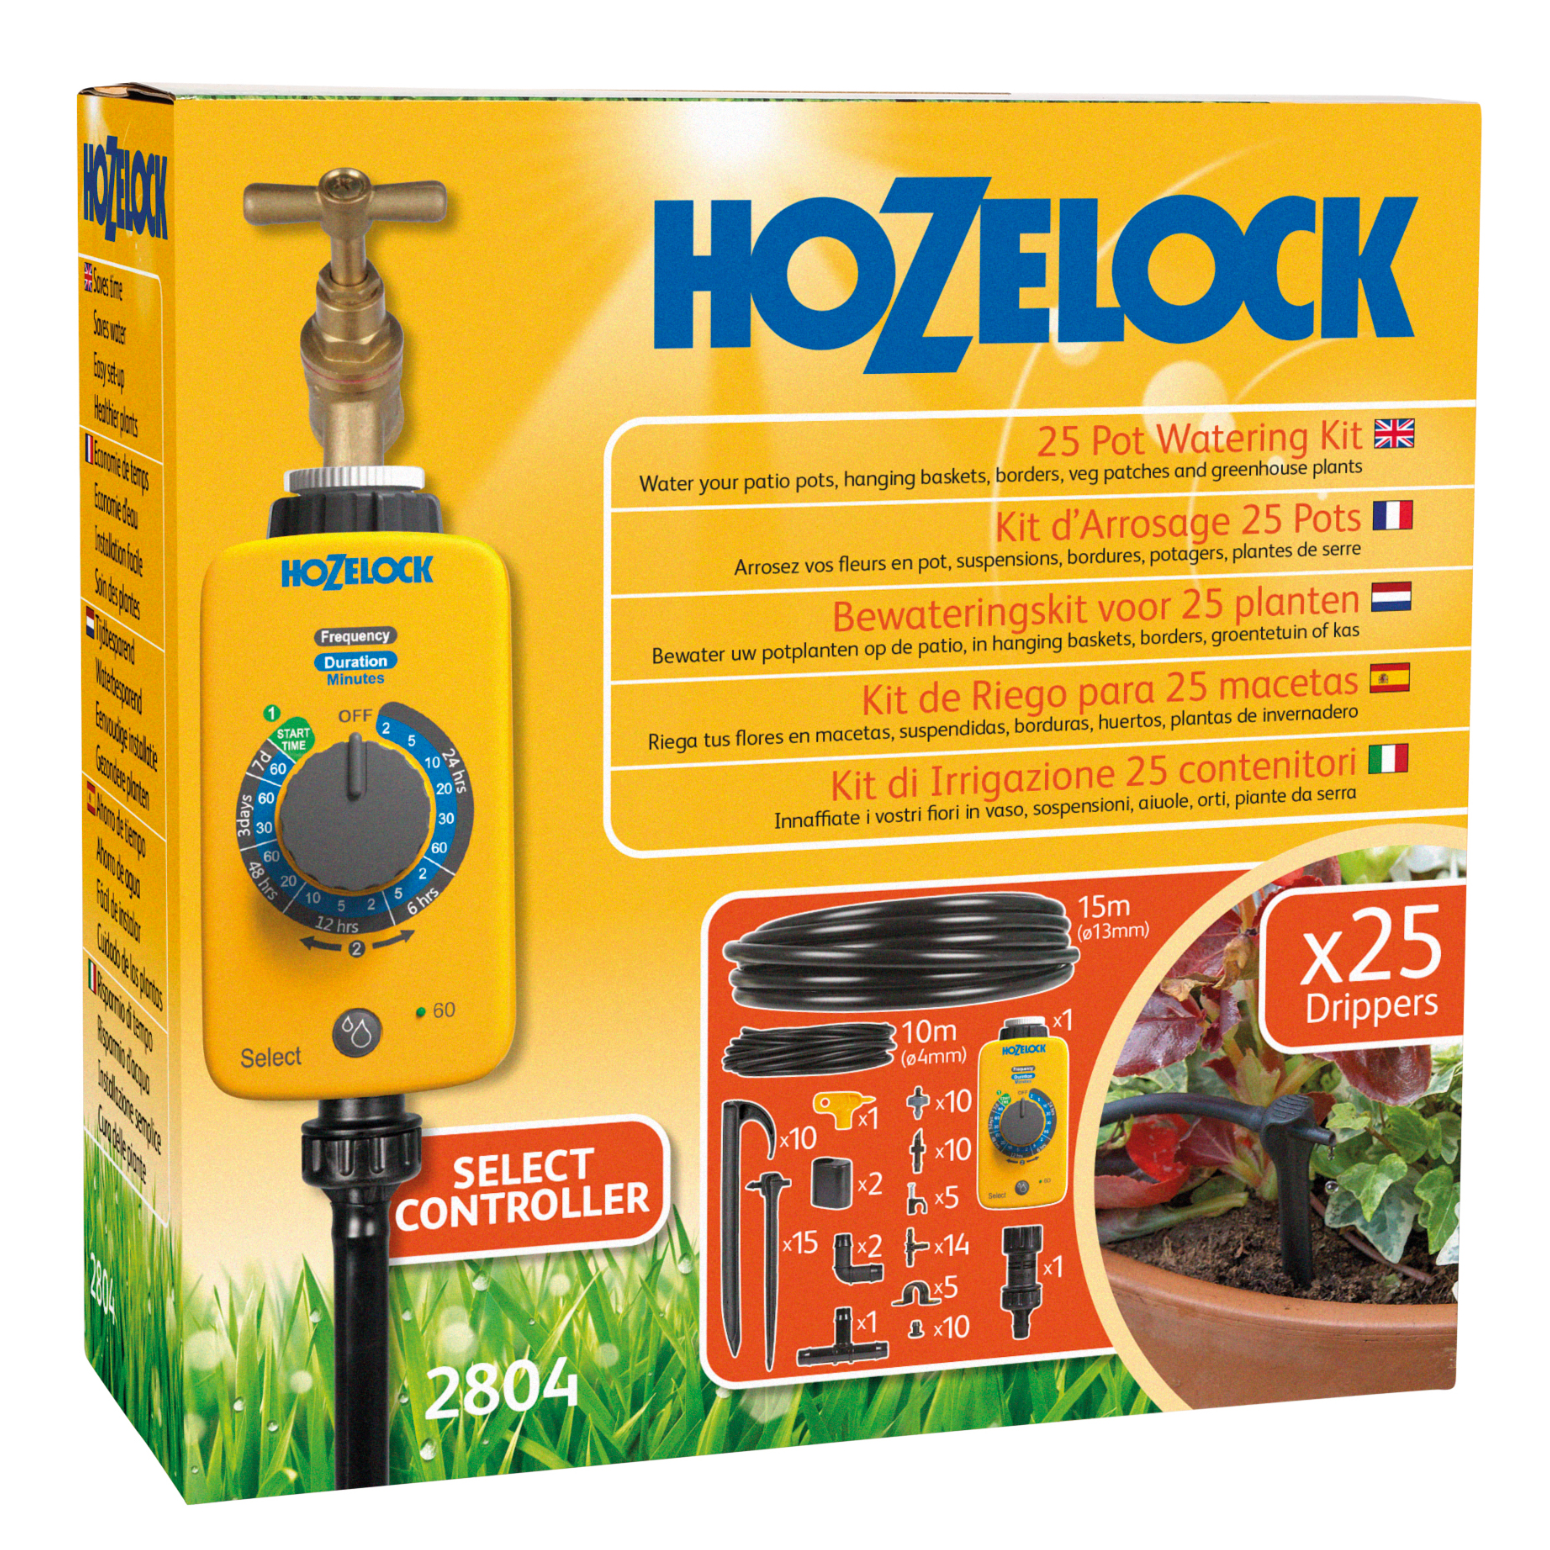 Hozelock 2804 25 Pot Watering Kit